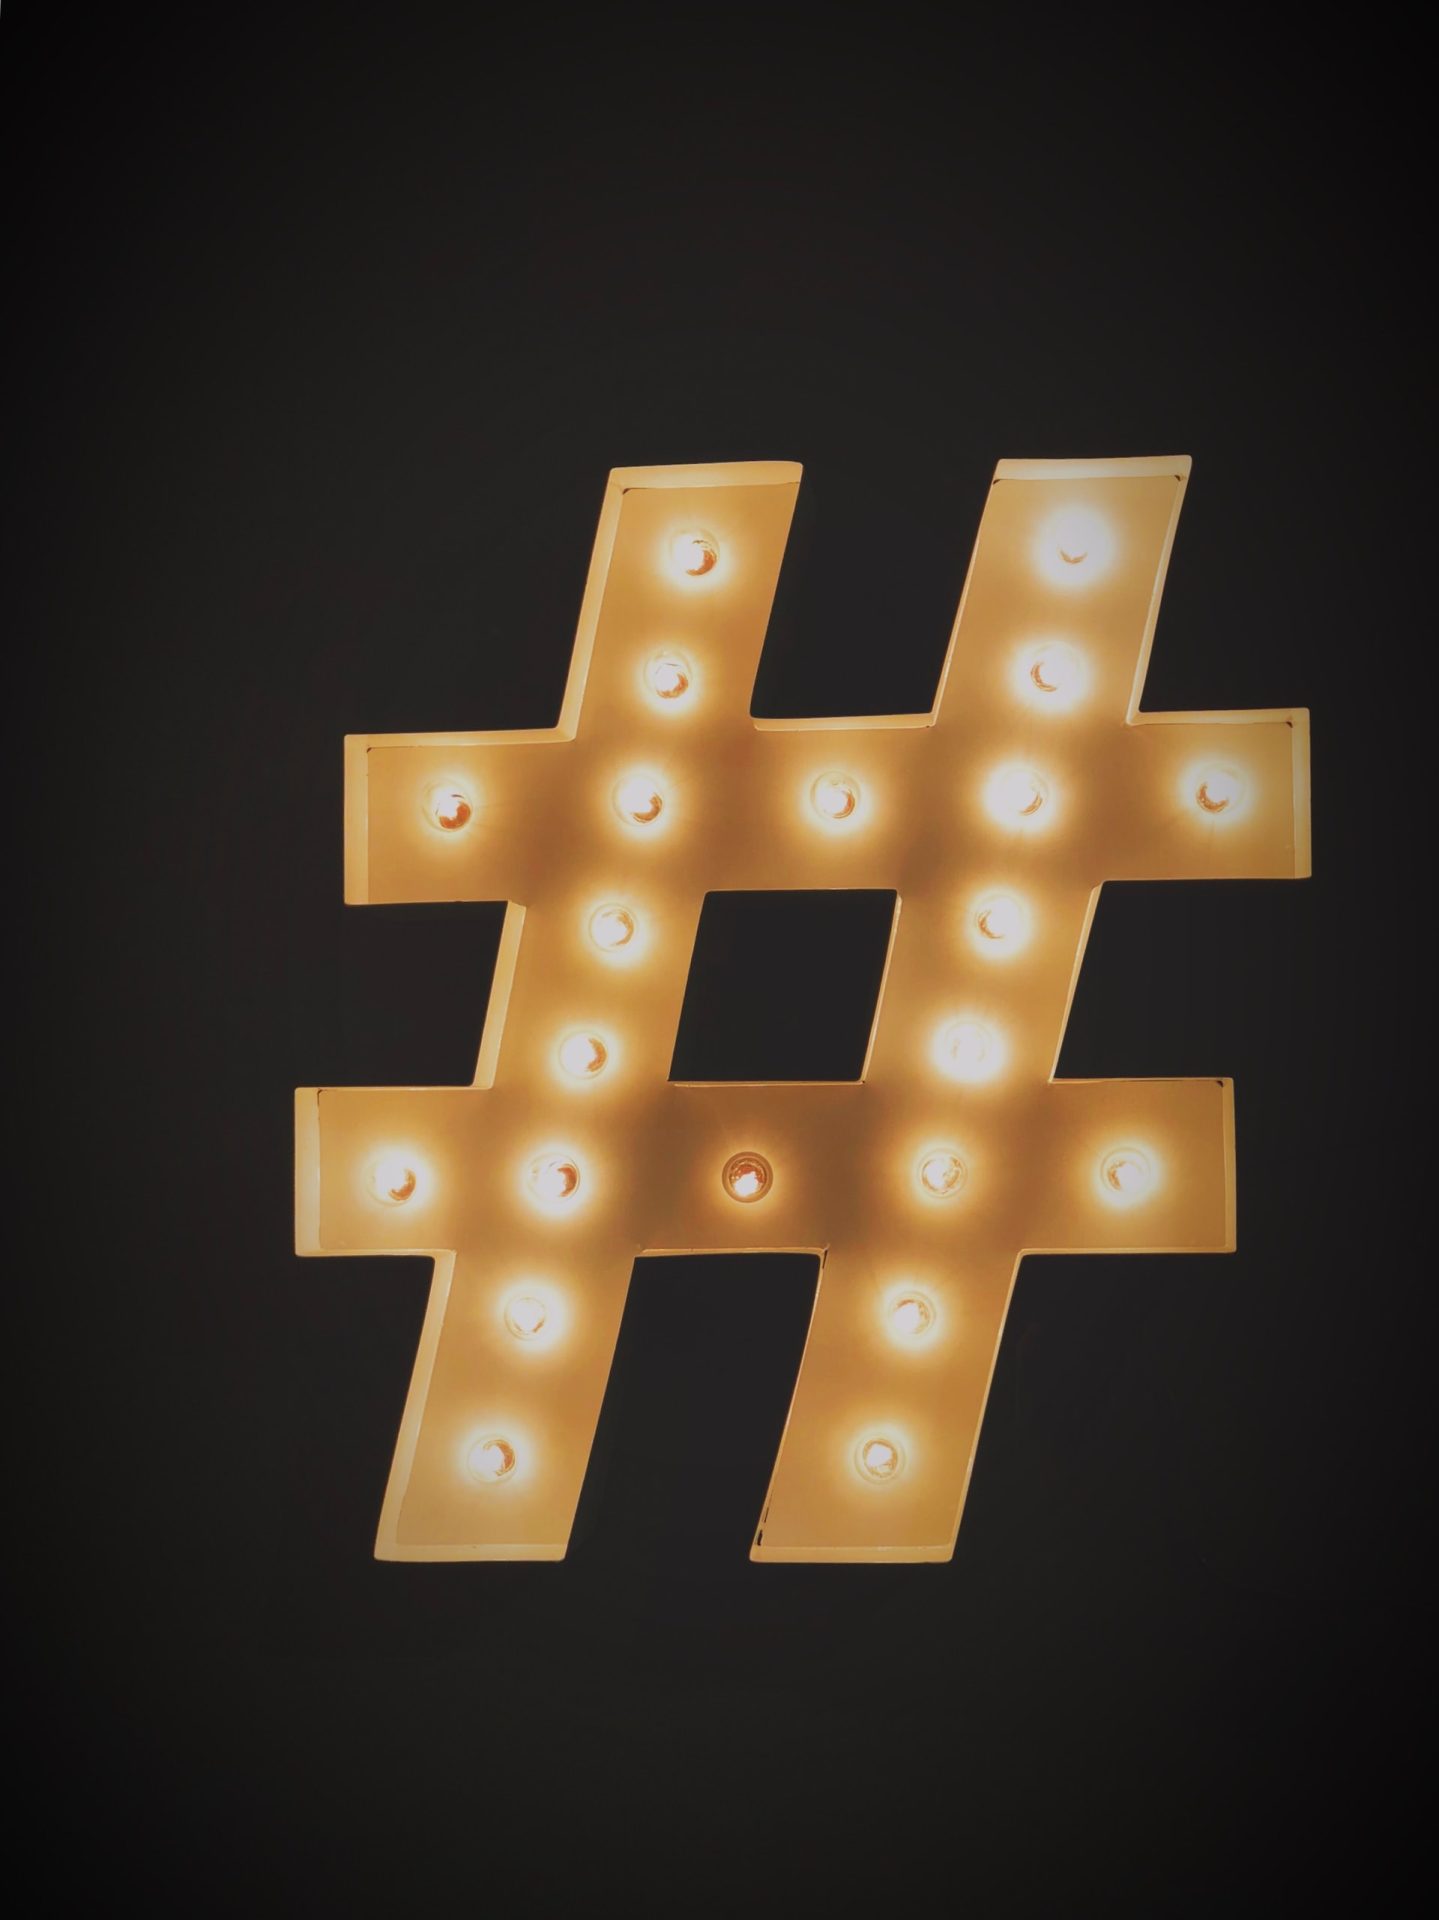 Leuchtender Hashtag als Symbol für Social Media